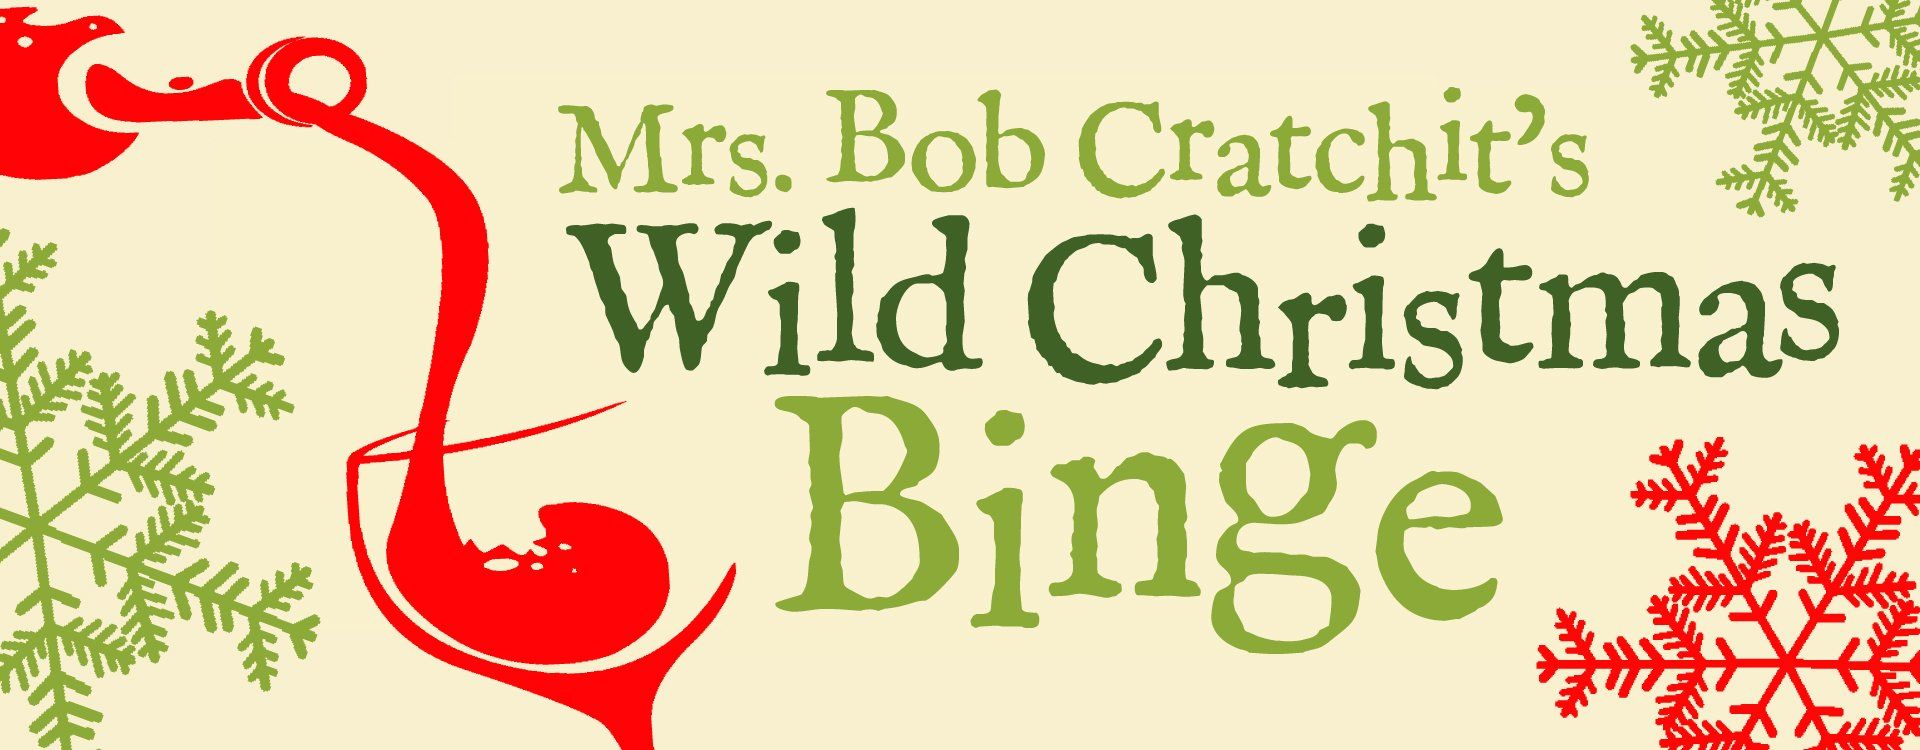 Title Treatment for Mrs. Bob Cratchit’s Wild Christmas Binge